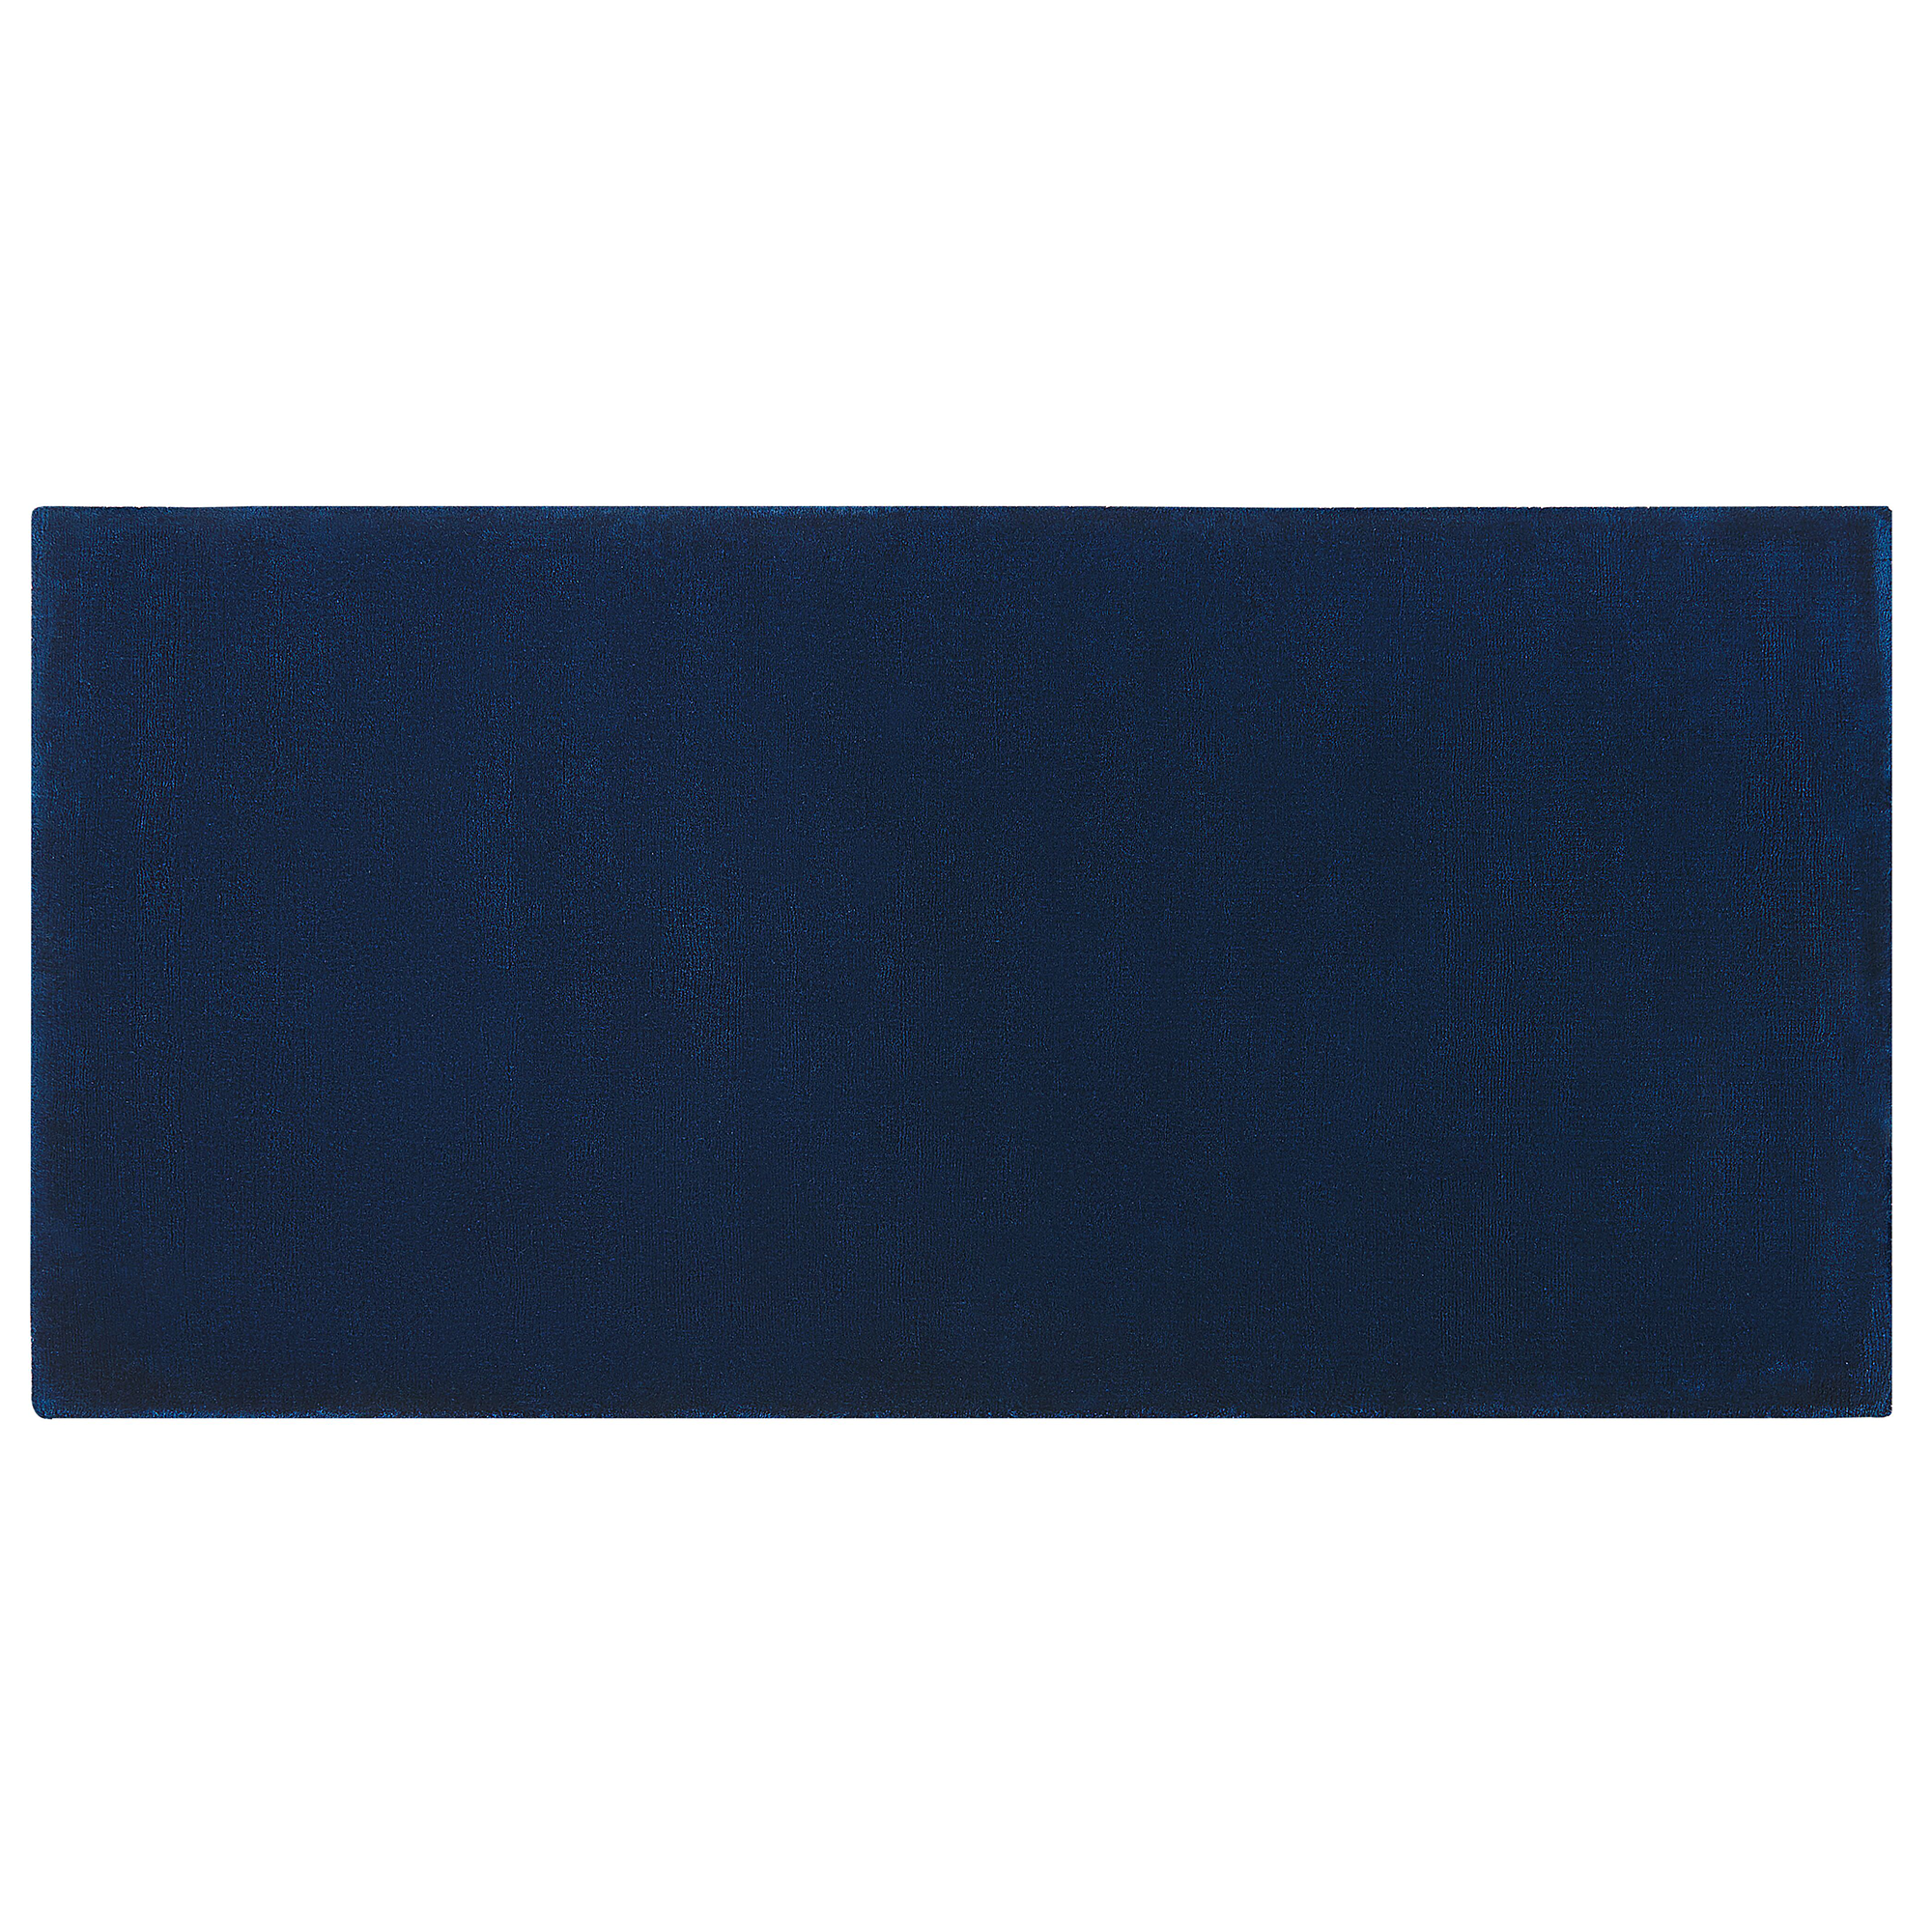 Beliani Rug Navy Blue Viscose 150 x 80 cm Hand Tufted Low Pile Modern